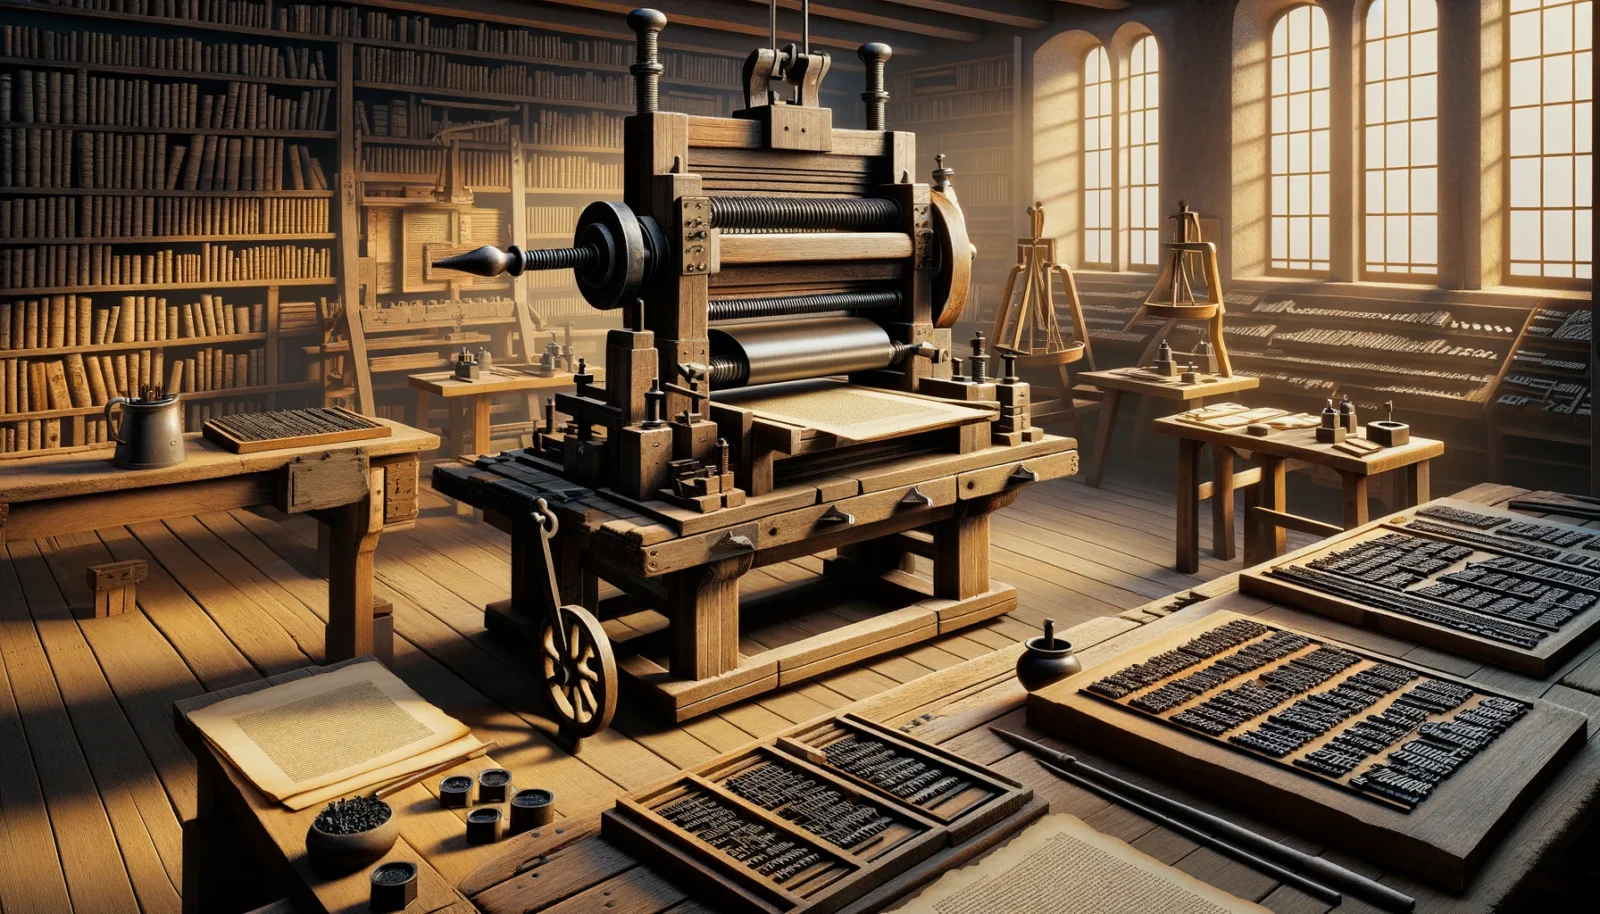 Printing Press Invented